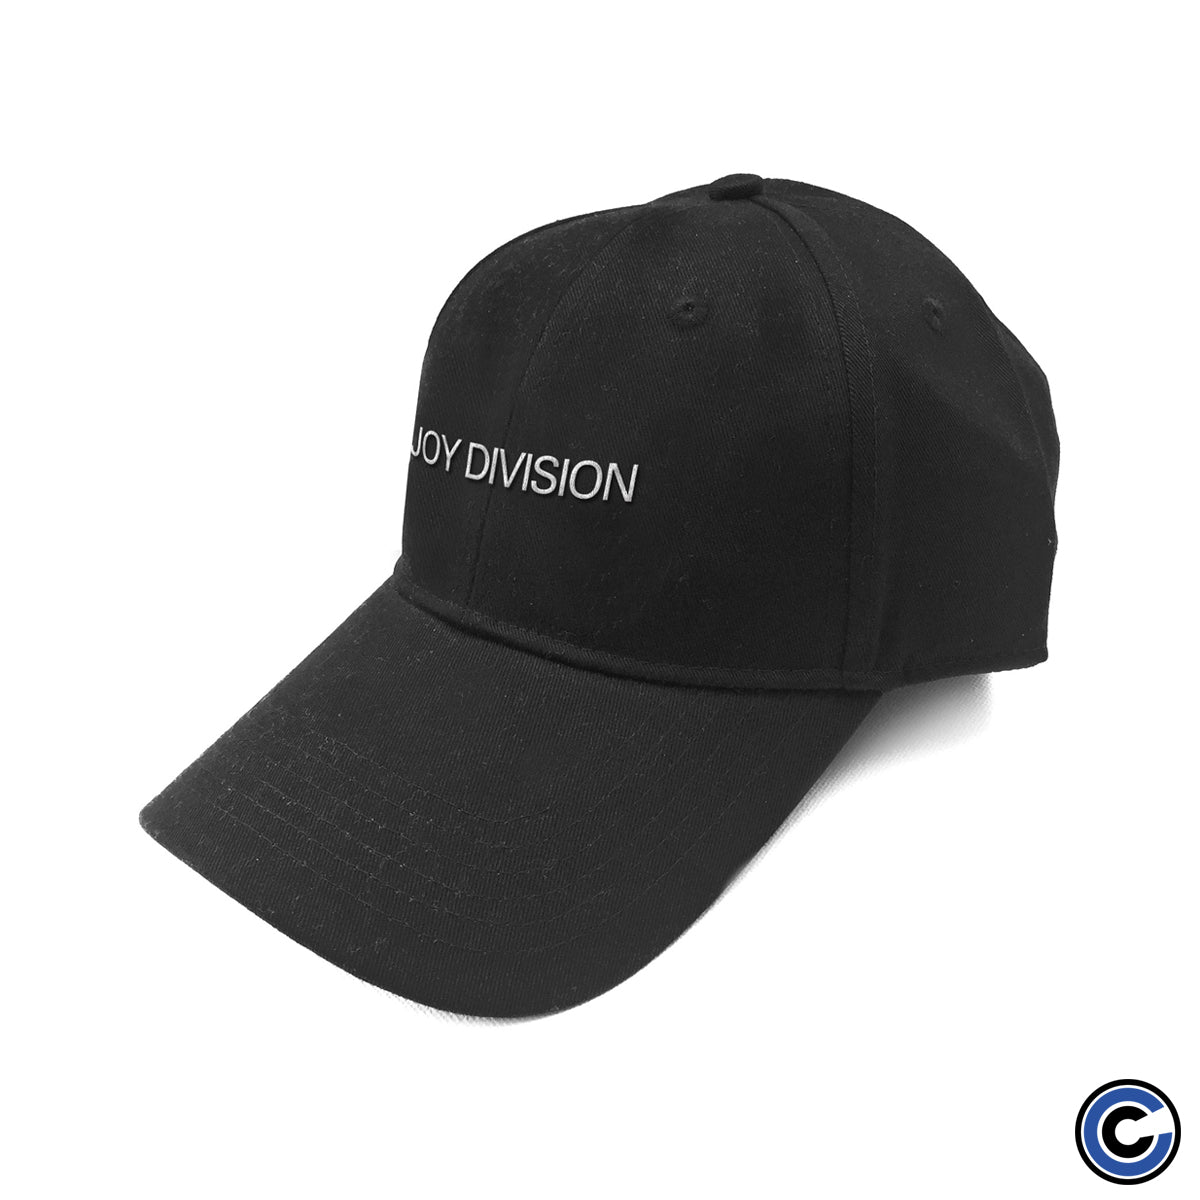 Joy Division "Logo" Hat